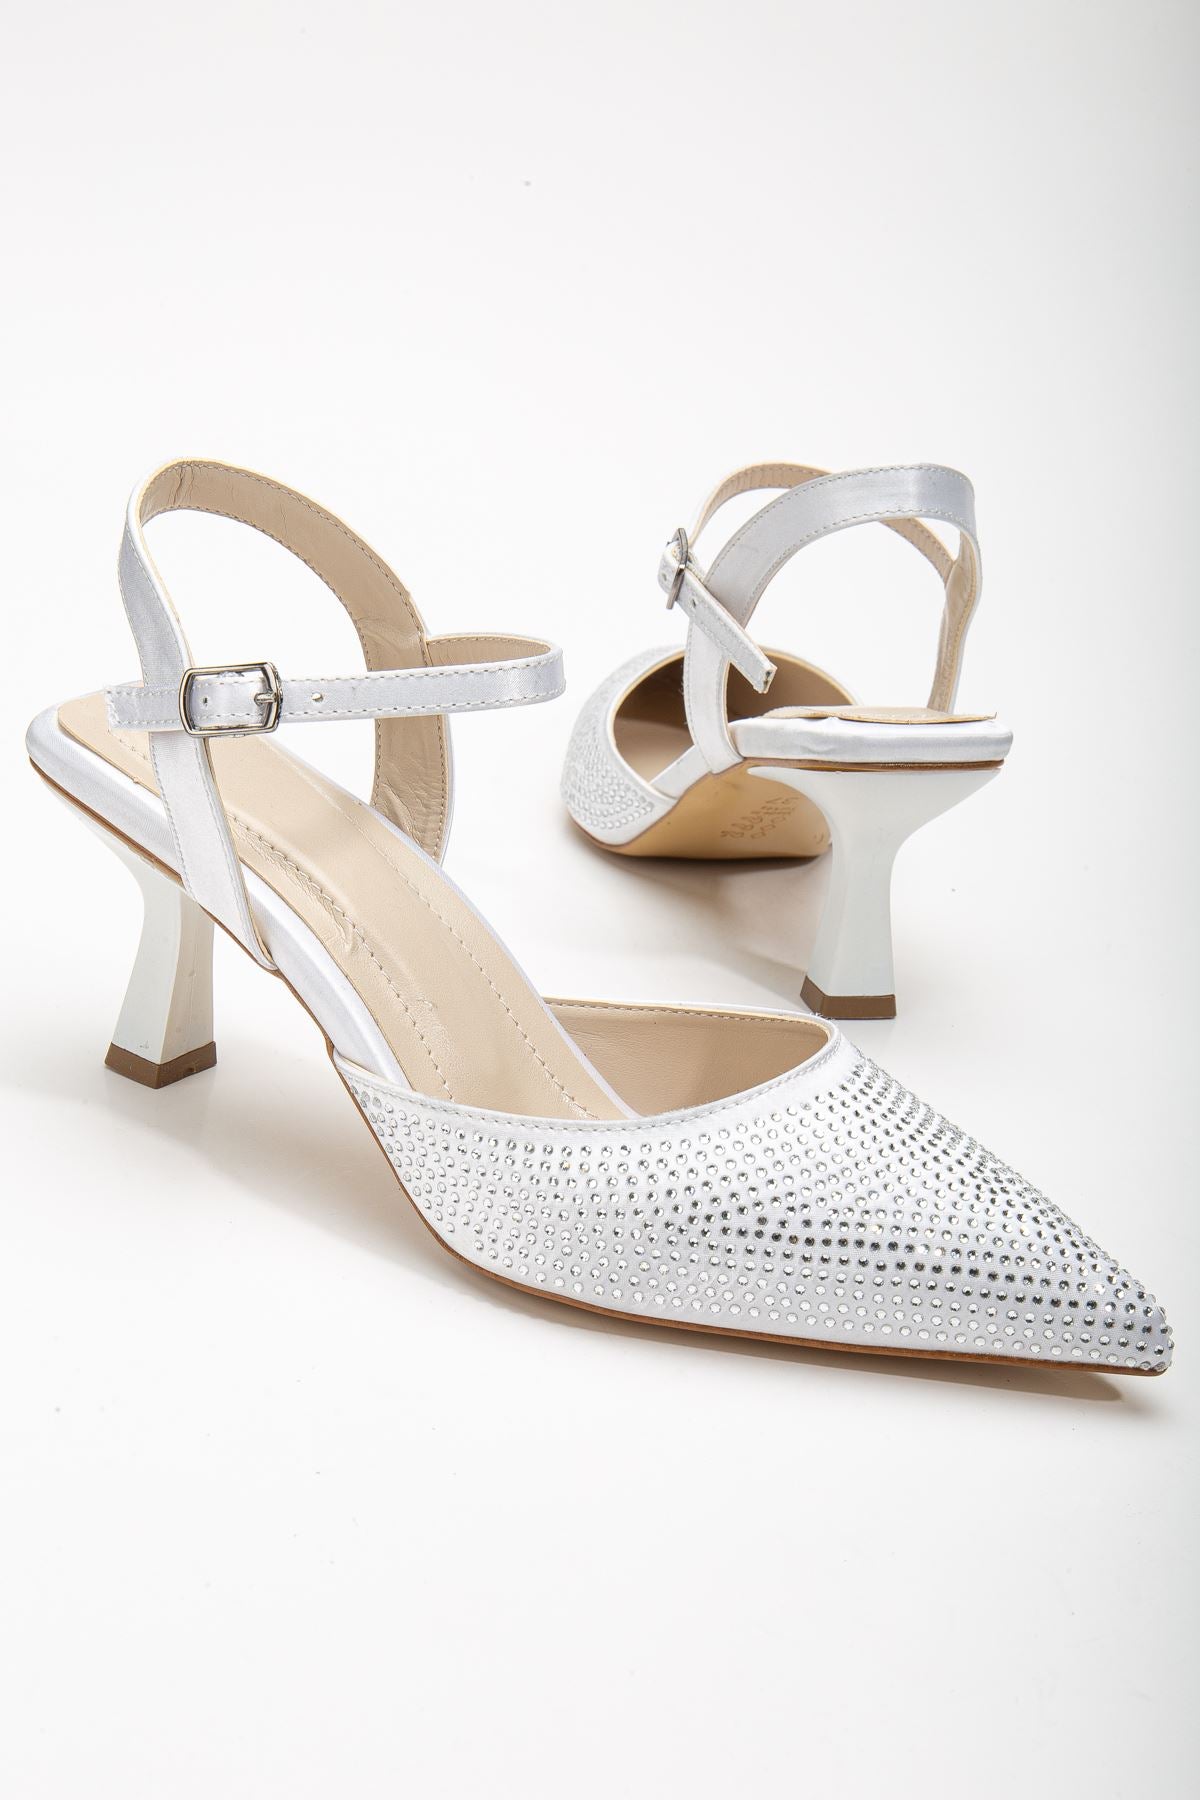 Sinda White Satin Stone Detailed Thin Heeled Women's Shoes - STREETMODE ™